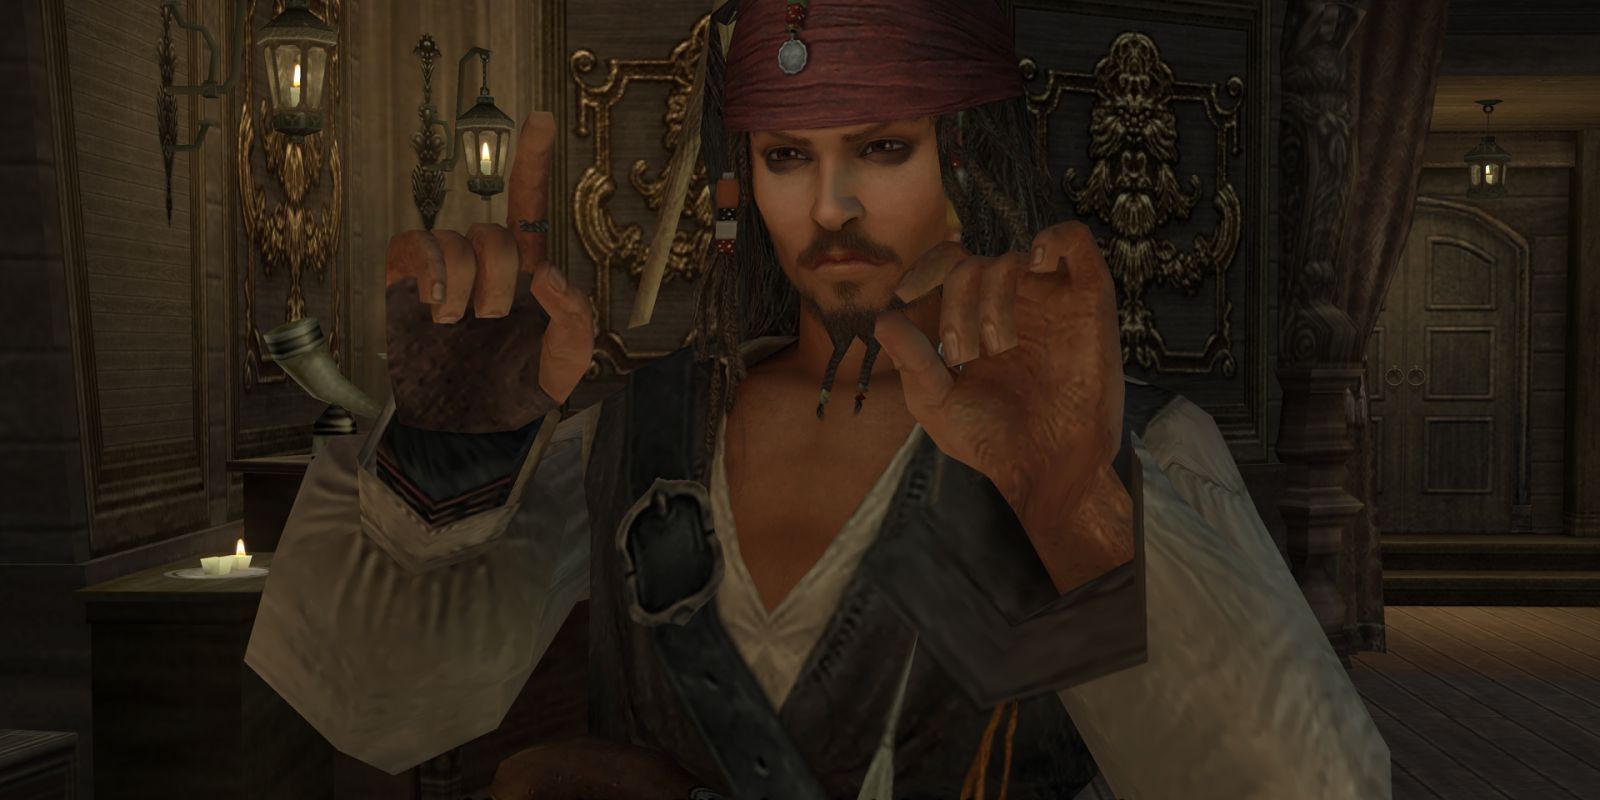 Jack Sparrow appears in Kingdom Hearts II